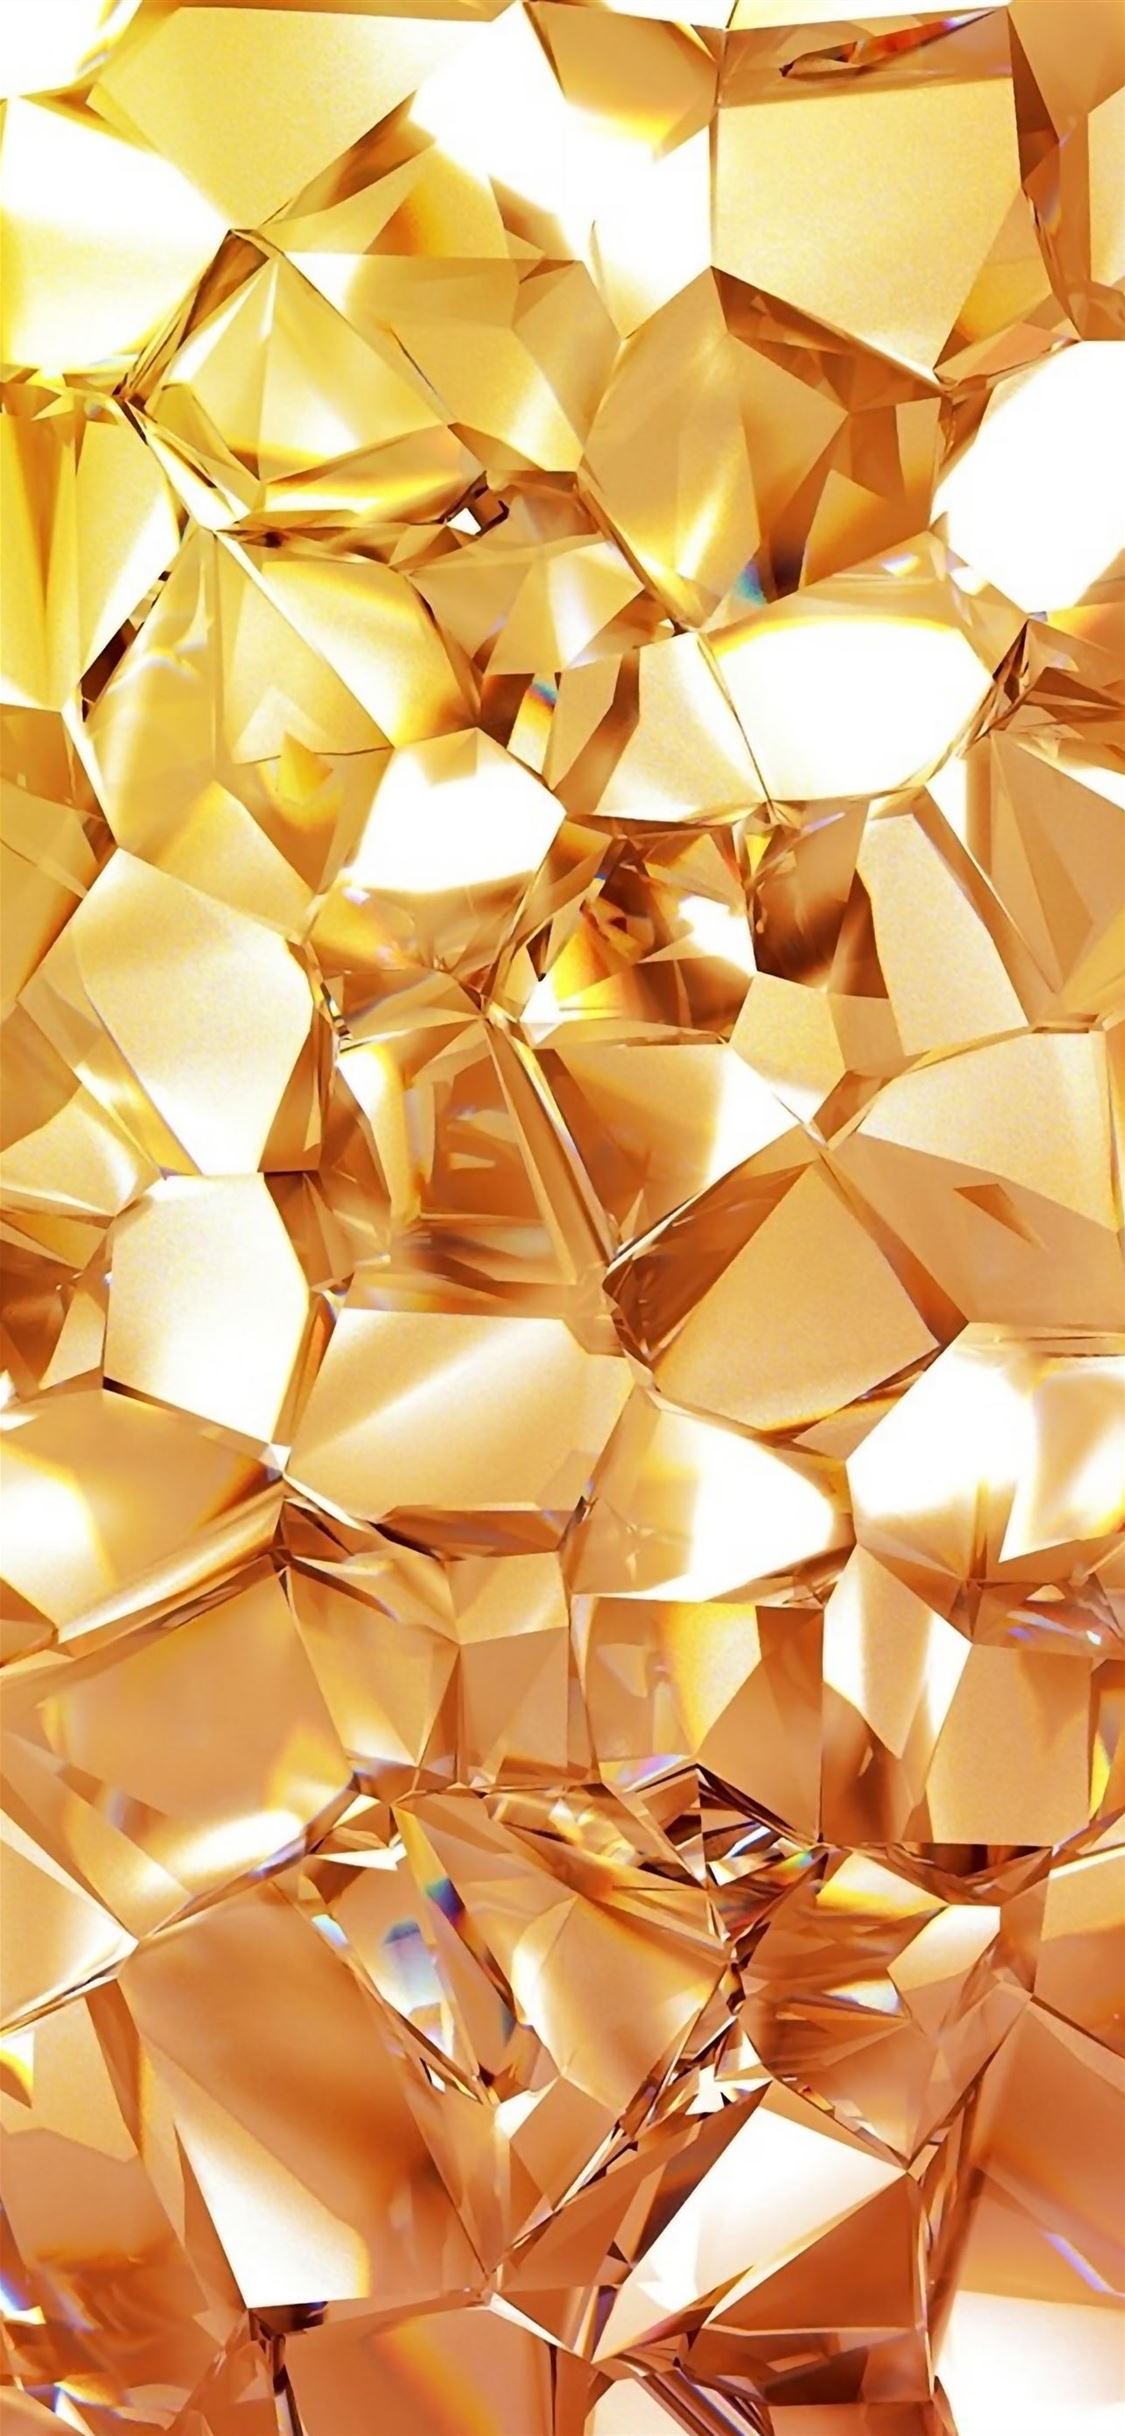 Geometric Gold Diamond iPhone wallpaper 